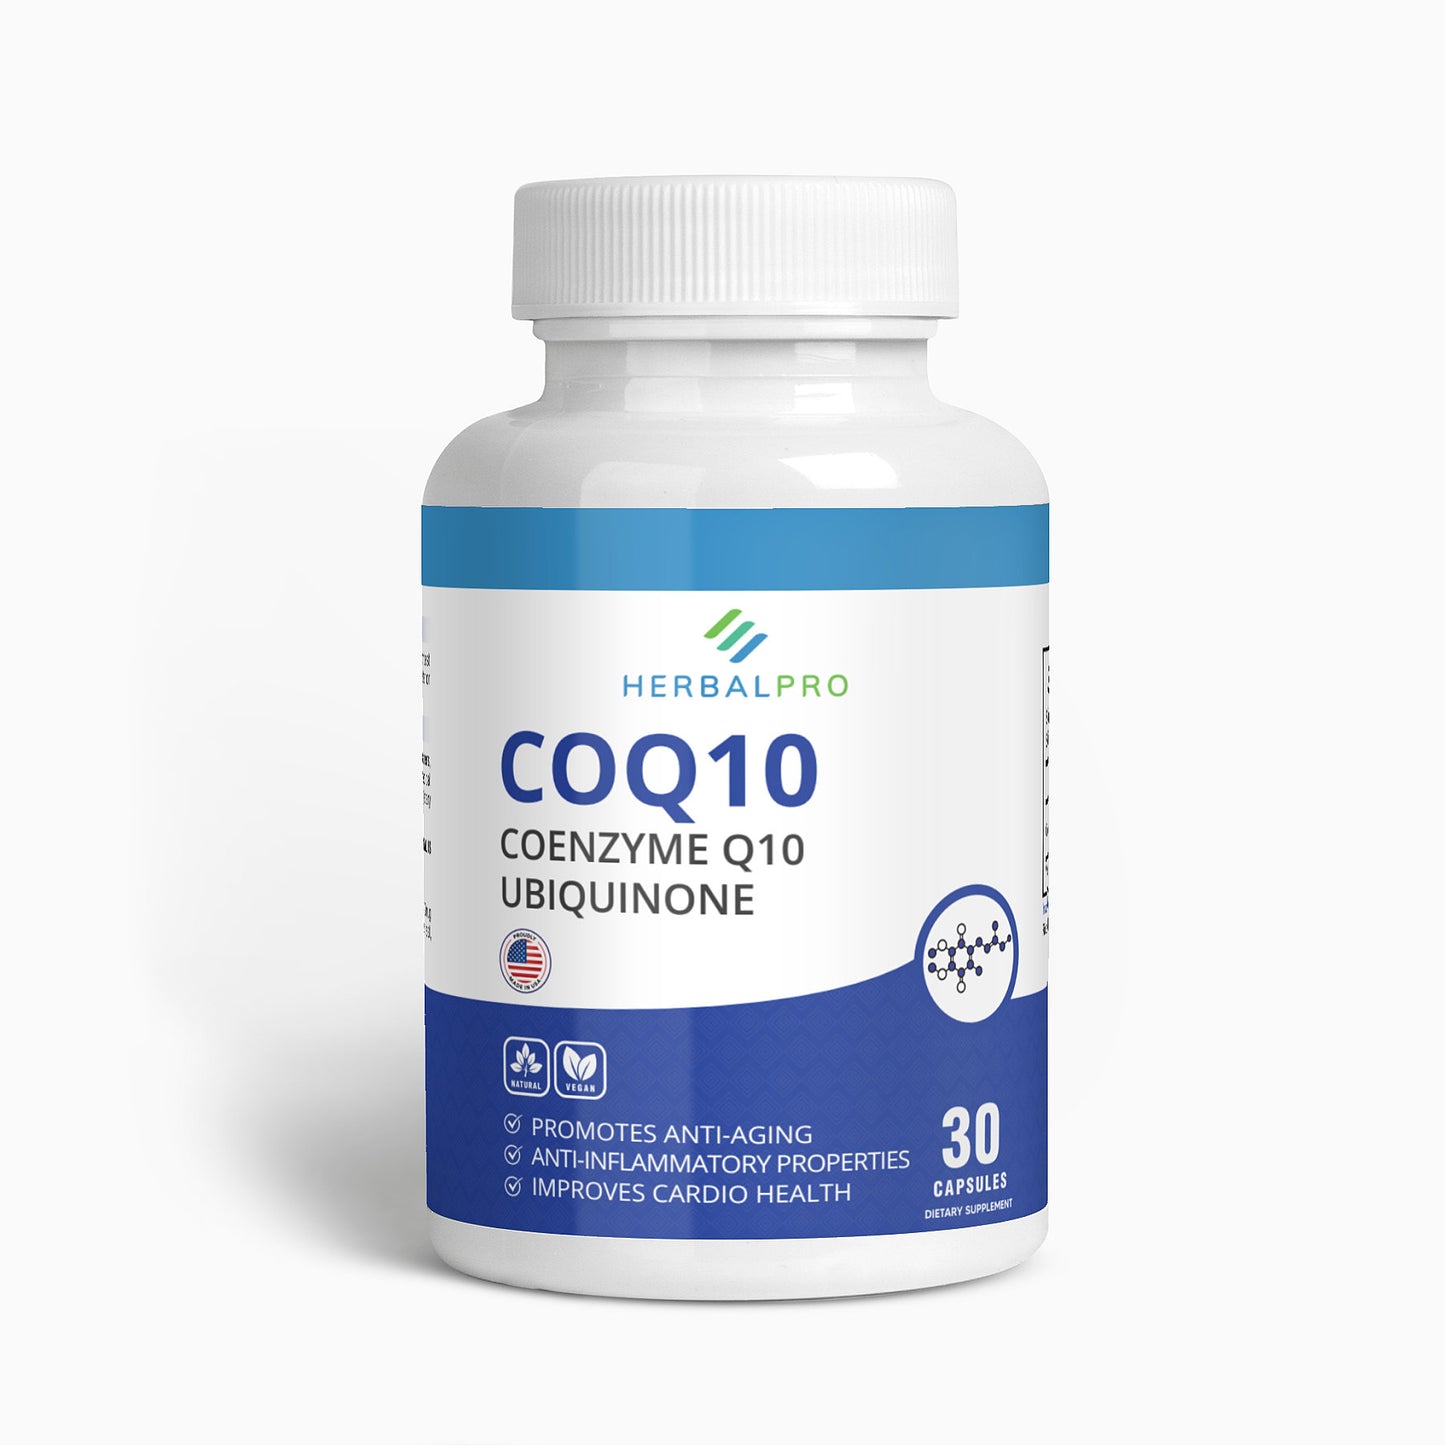 CoQ10 (Coenzyme Q10 Ubiquinone)